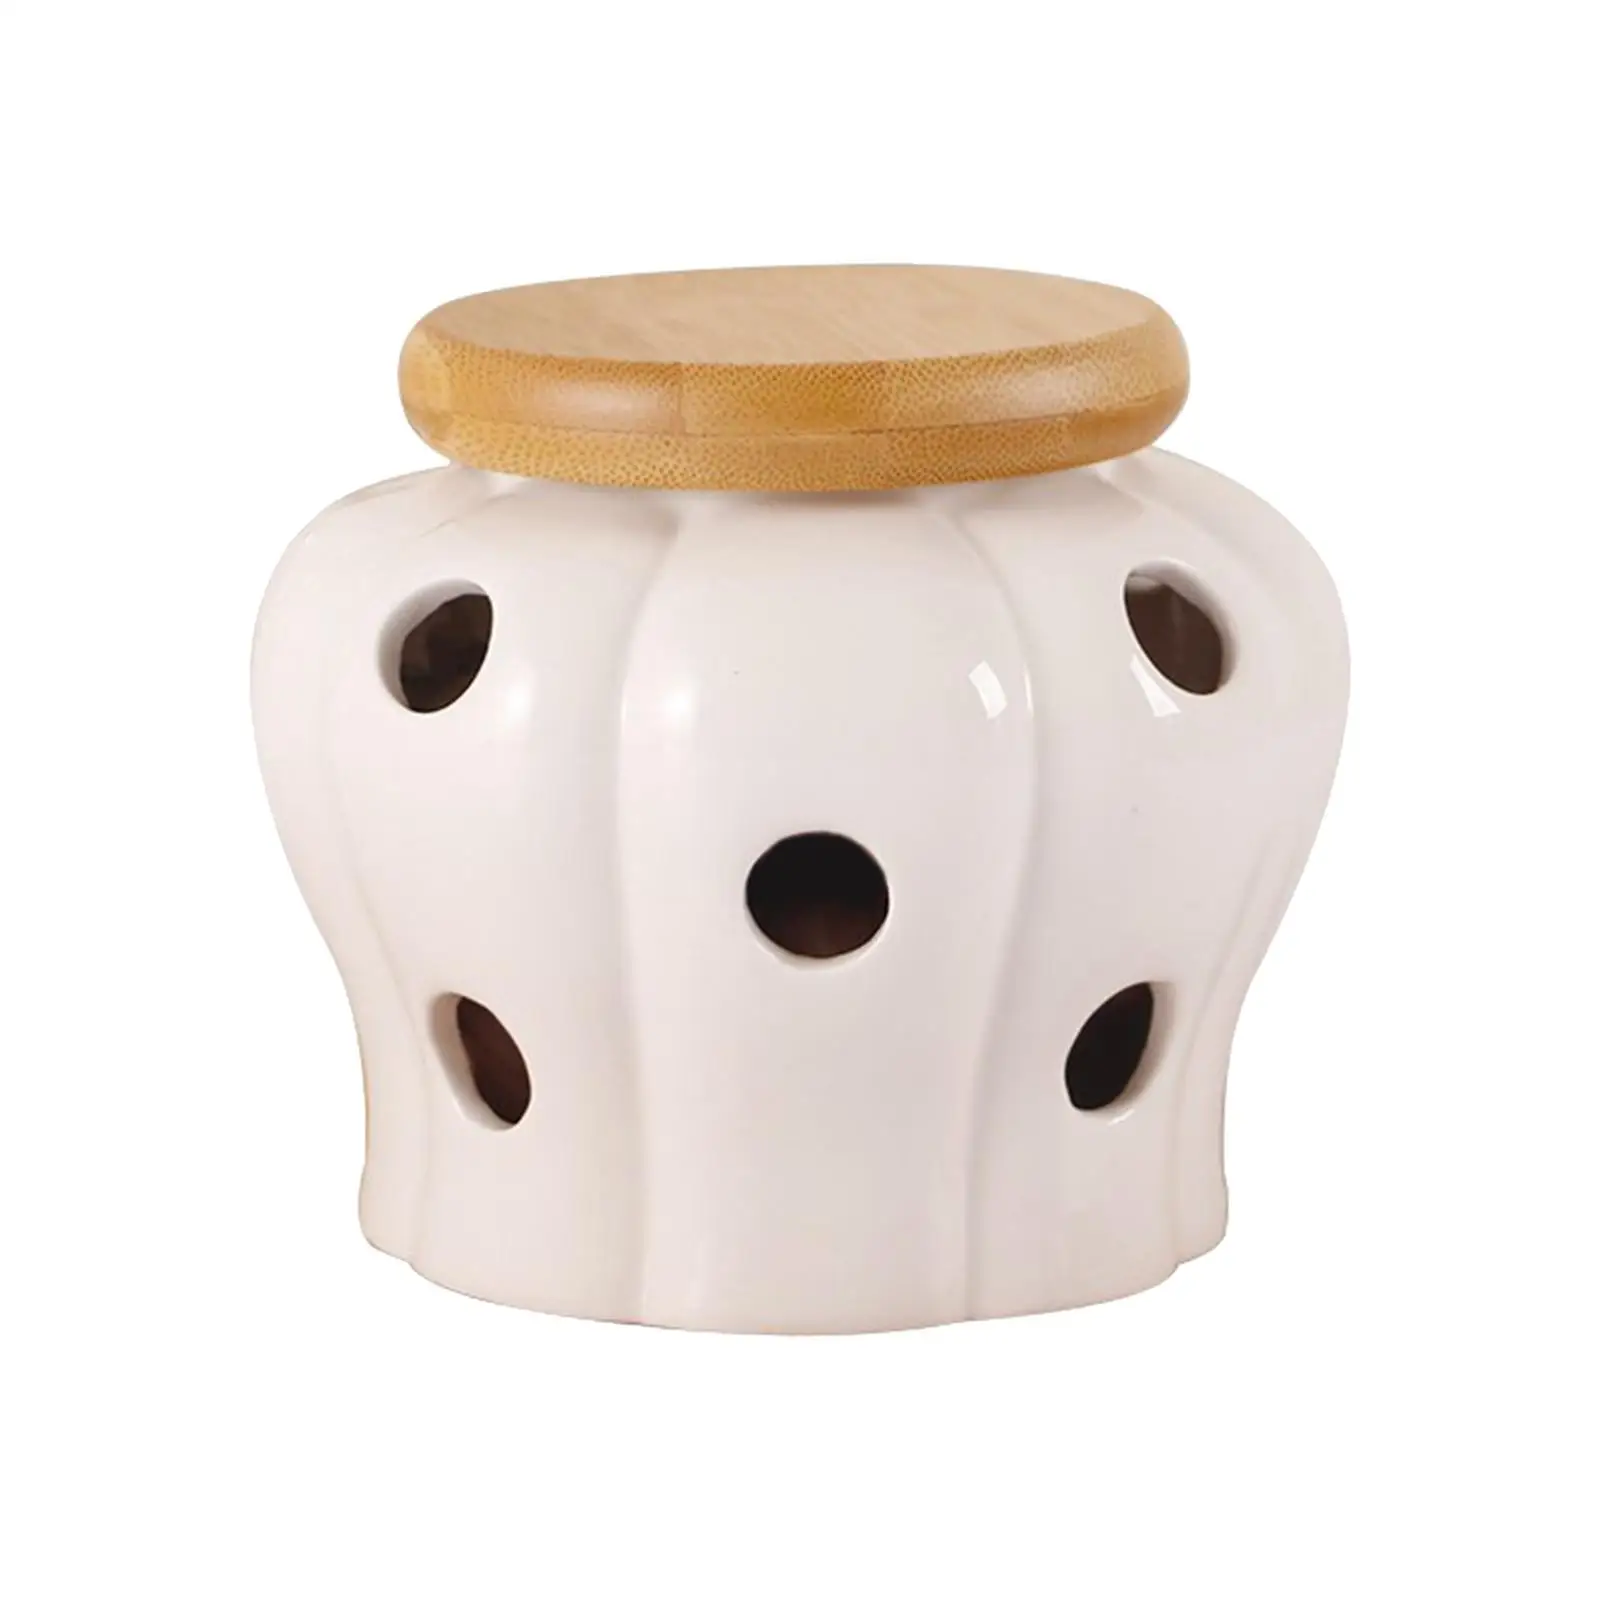 Creative Ceramic Storage Cans Garlic Ginger Storage Tank Jar Bamboo Cover Kitchen Organizer Tools Home Decoration Accessory